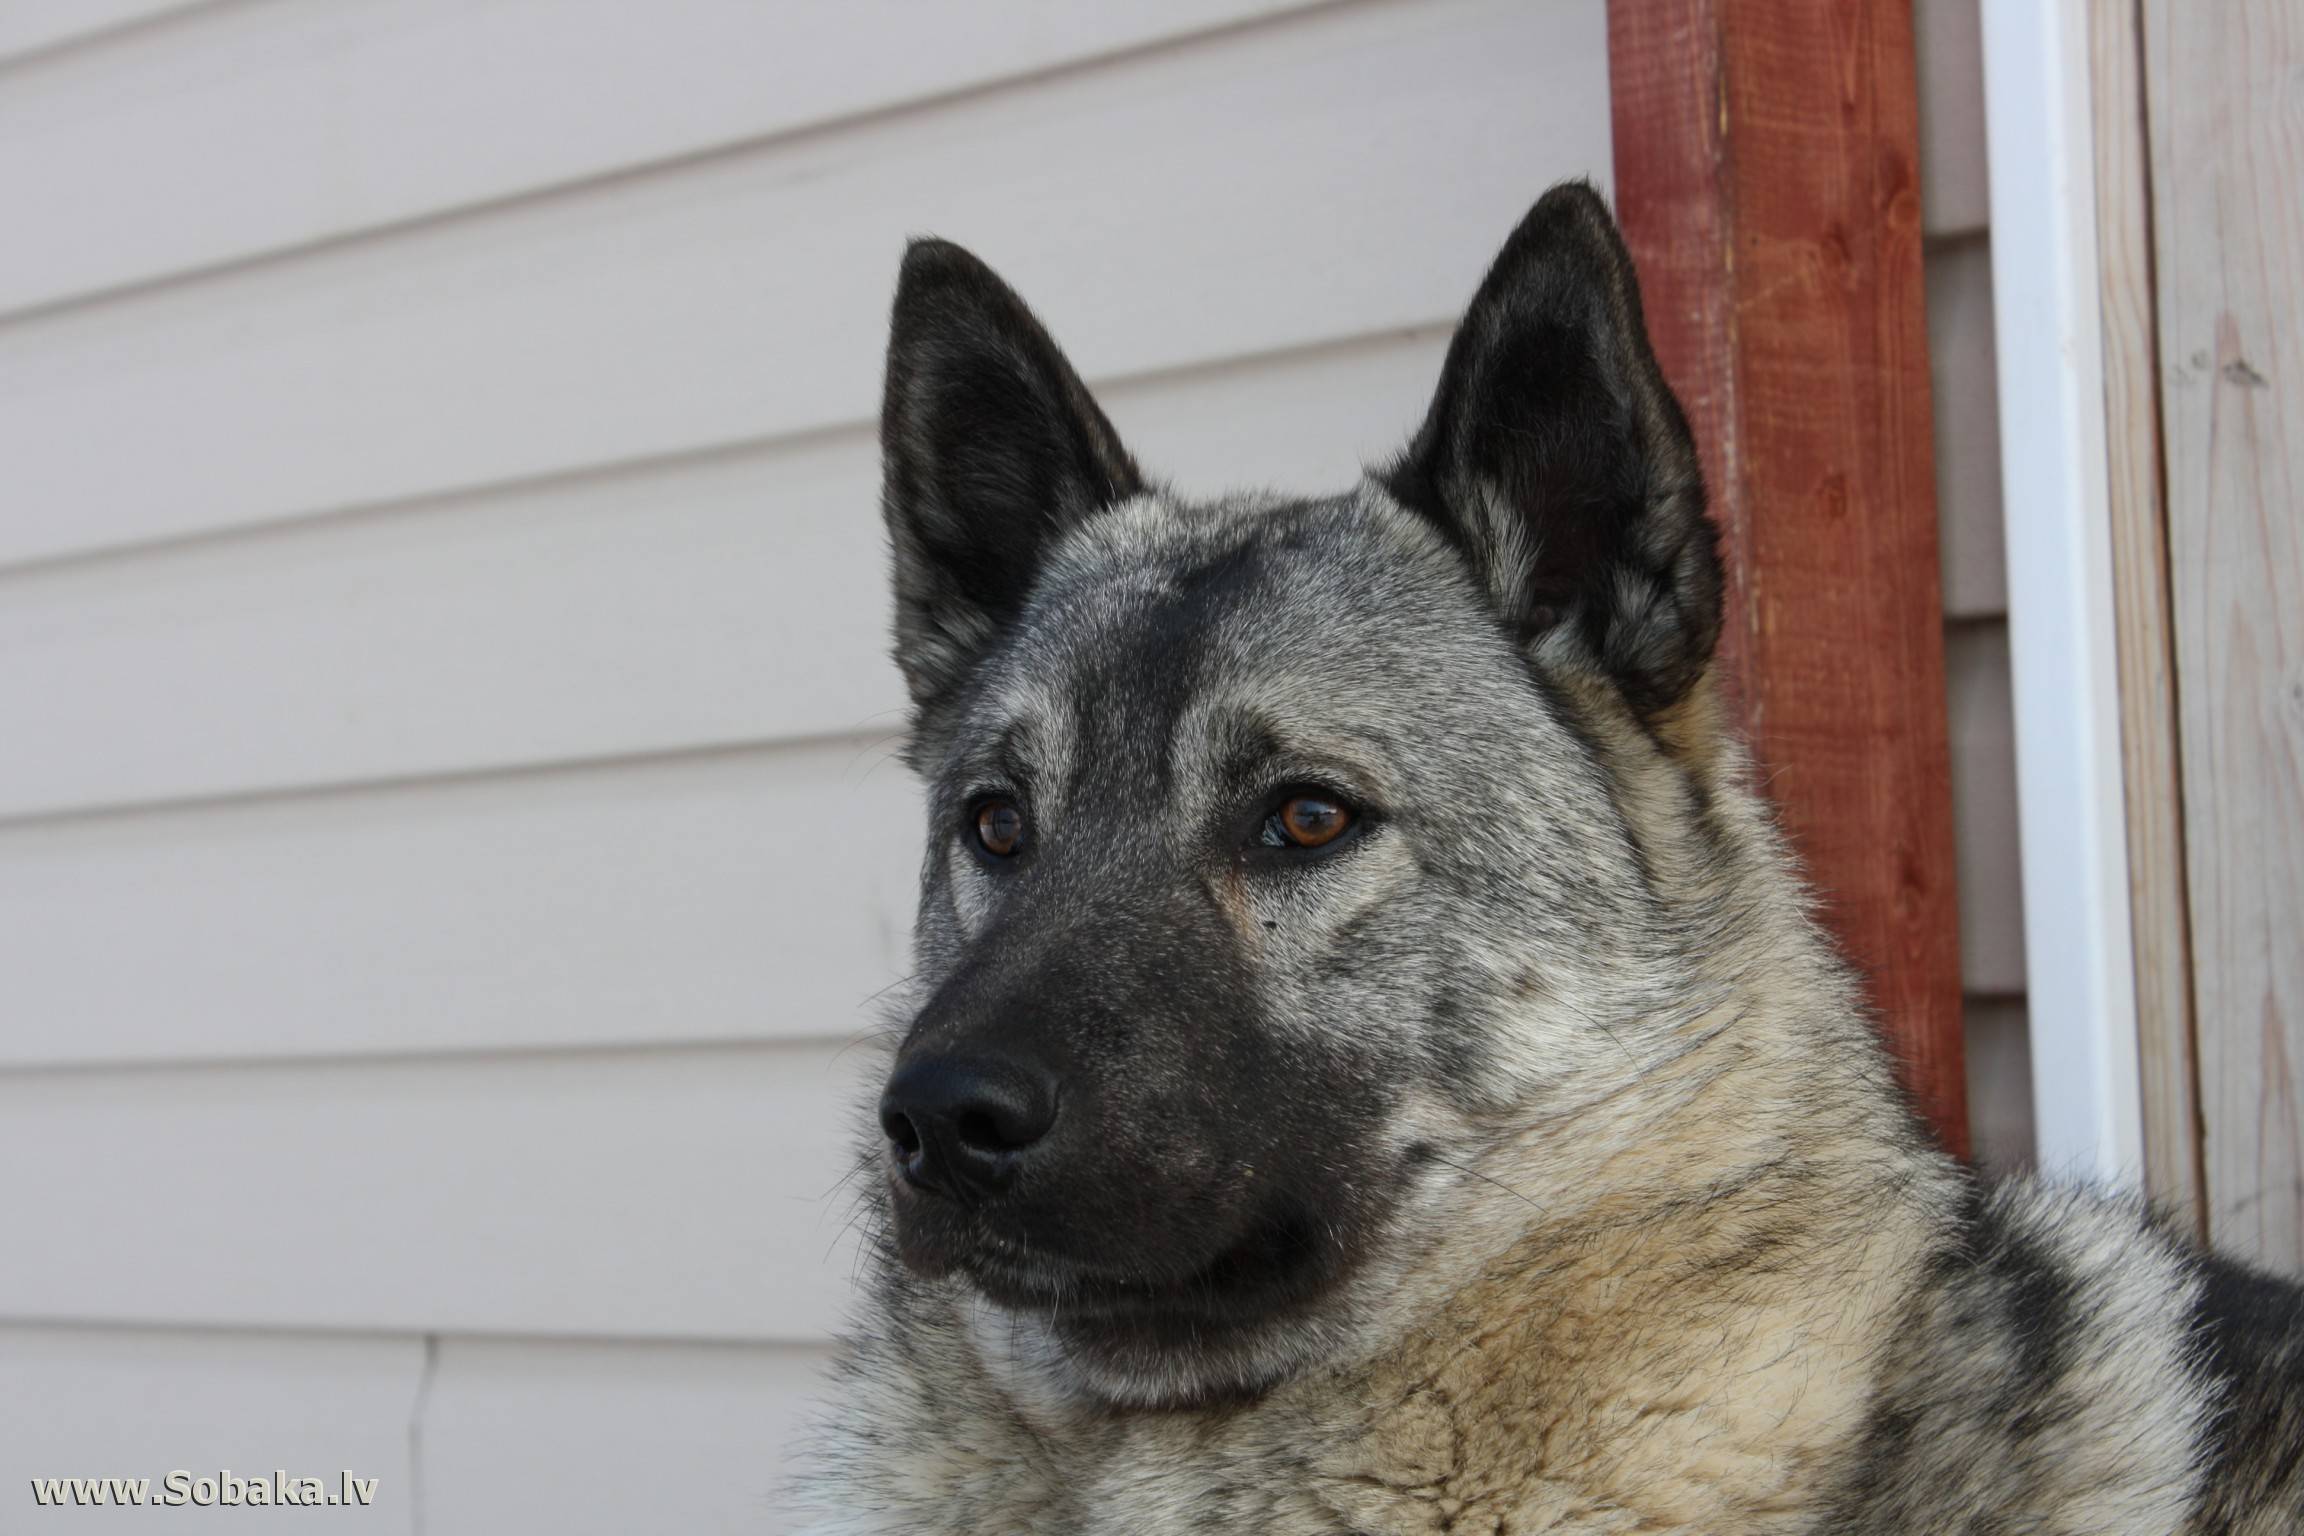 Характеристика собак породы норвежский элкхаунд с отзывами и фото